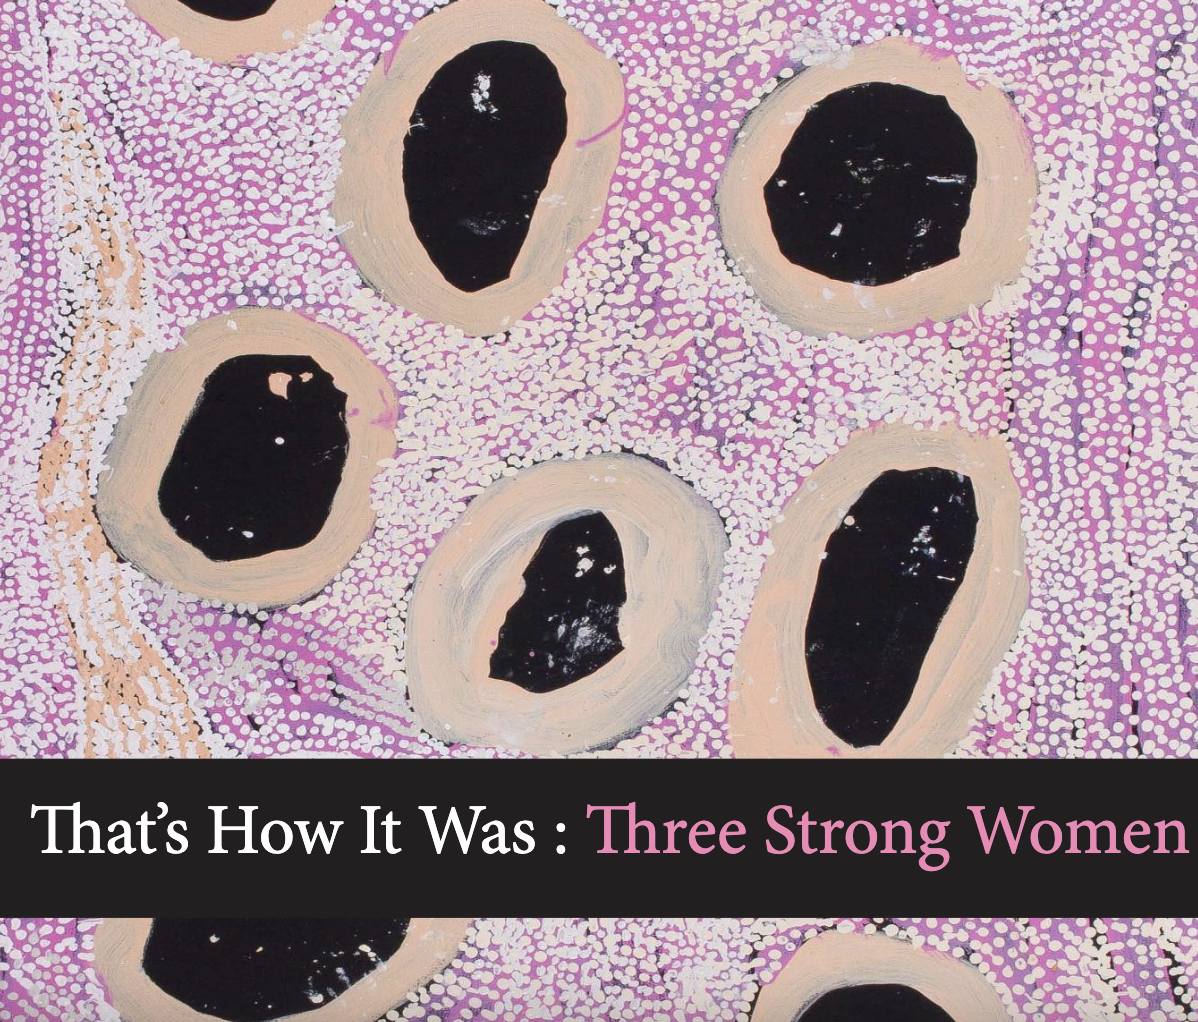 THREE STRONG WOMEN